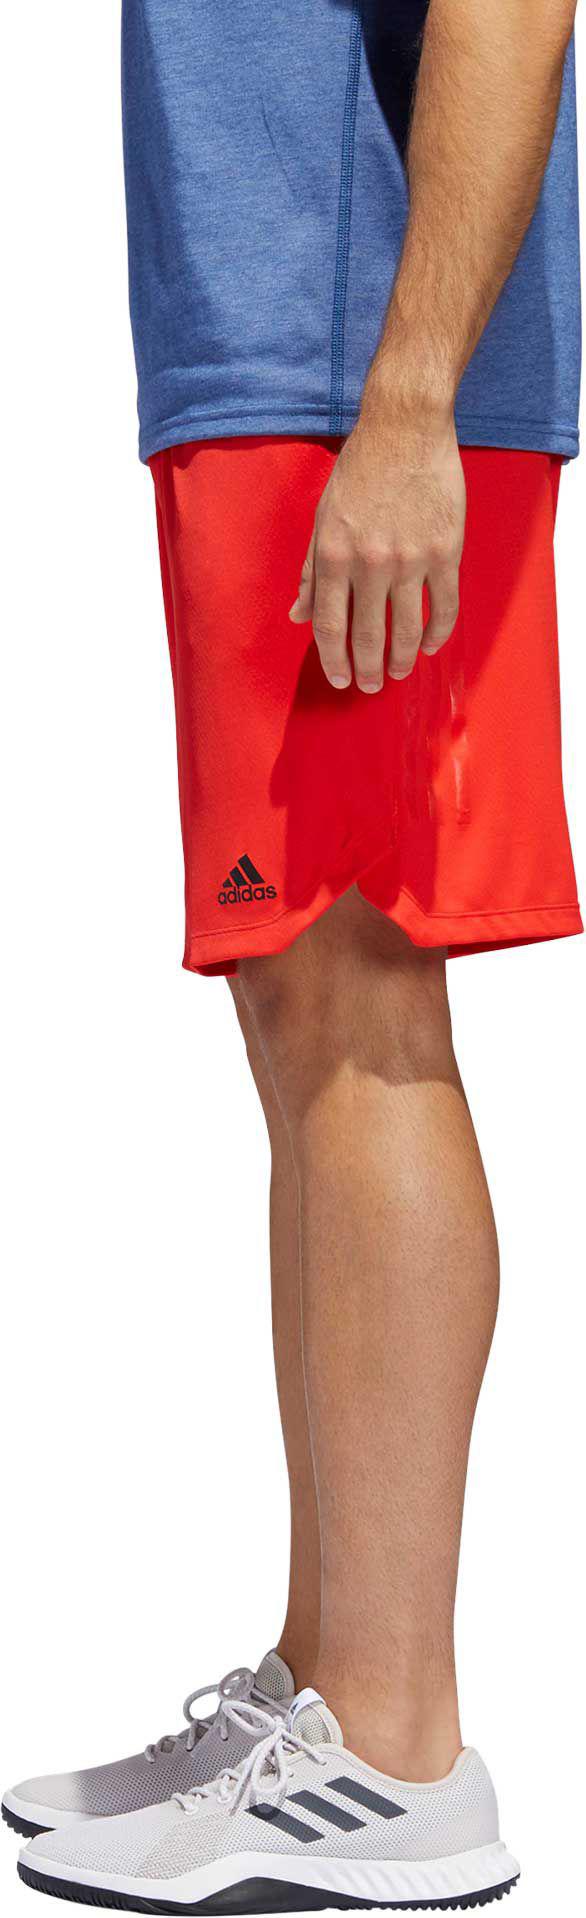 adidas men's axis knit training shorts